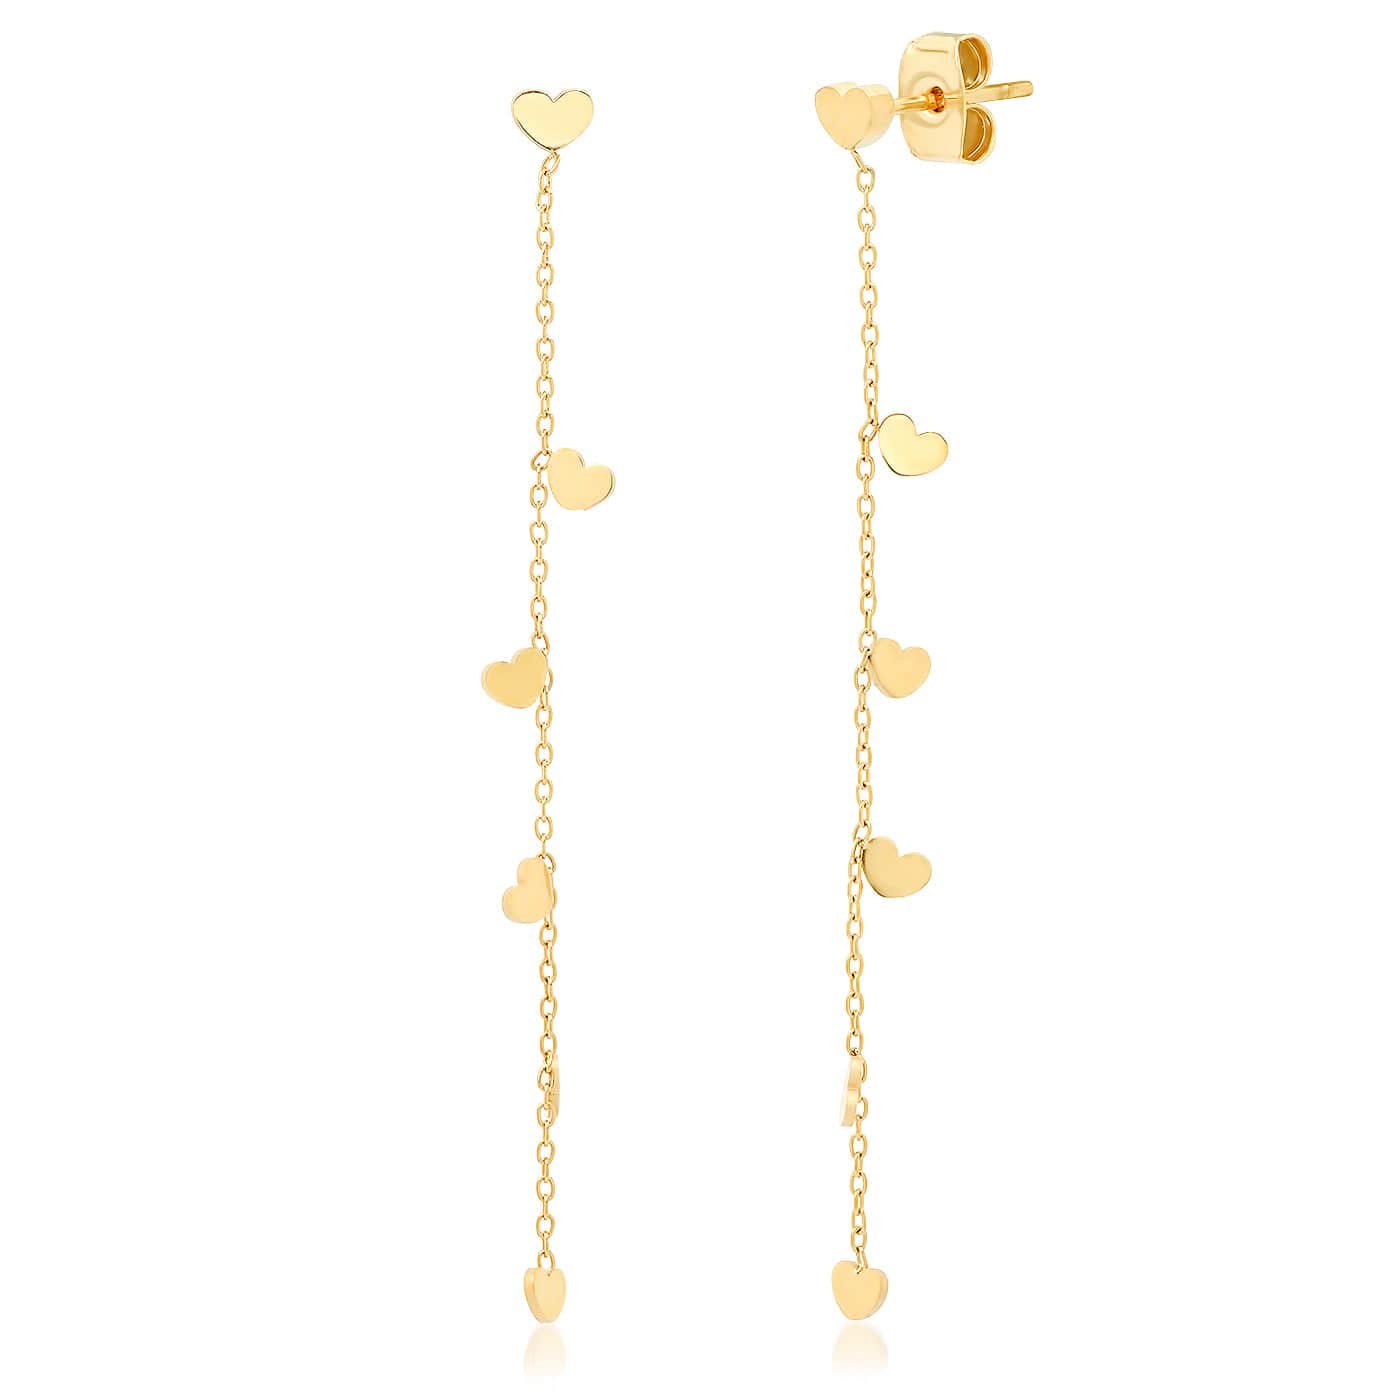 TAI JEWELRY Earrings Gold Chain Dangle Earrings With Heart Charms